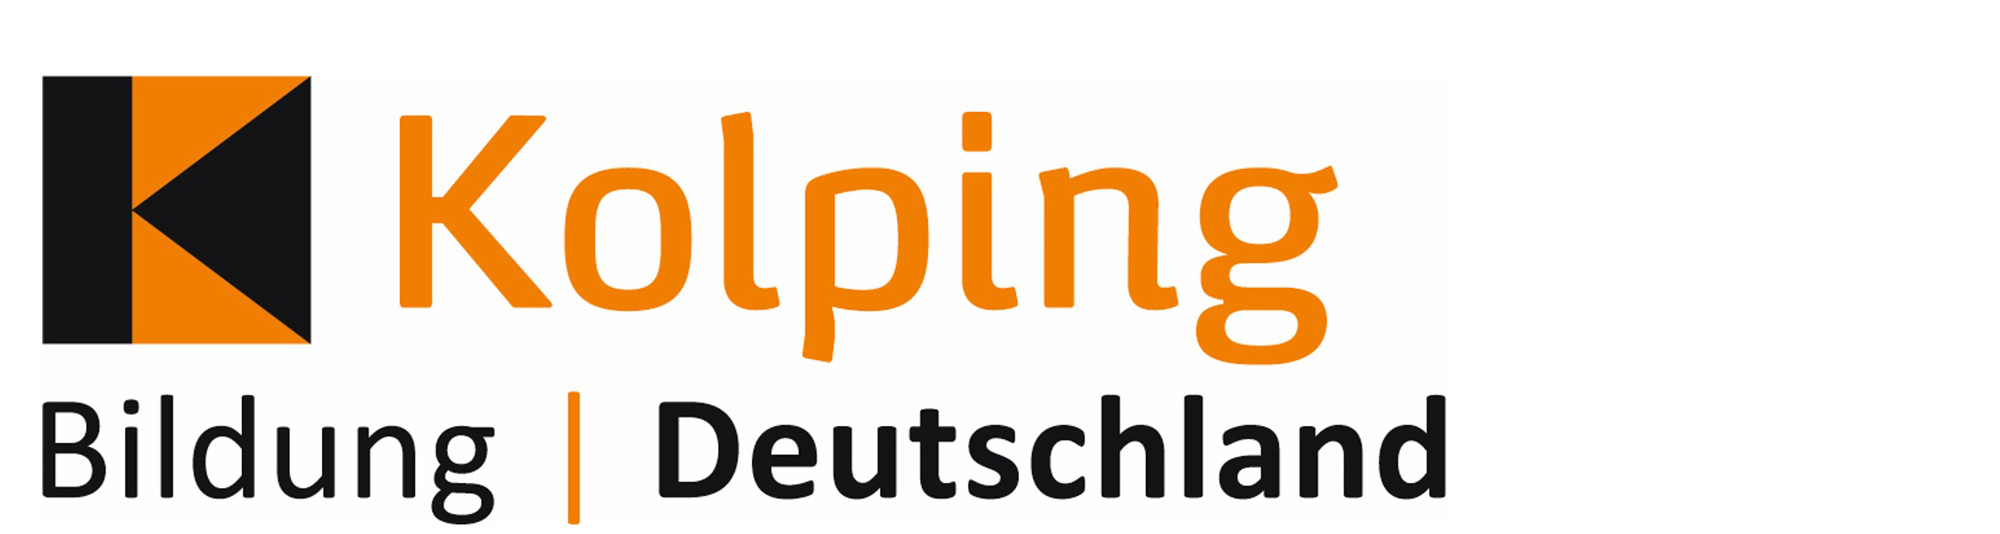 Kolping Bildung Deutschland gGmbH - Pflegeschule Wegberg